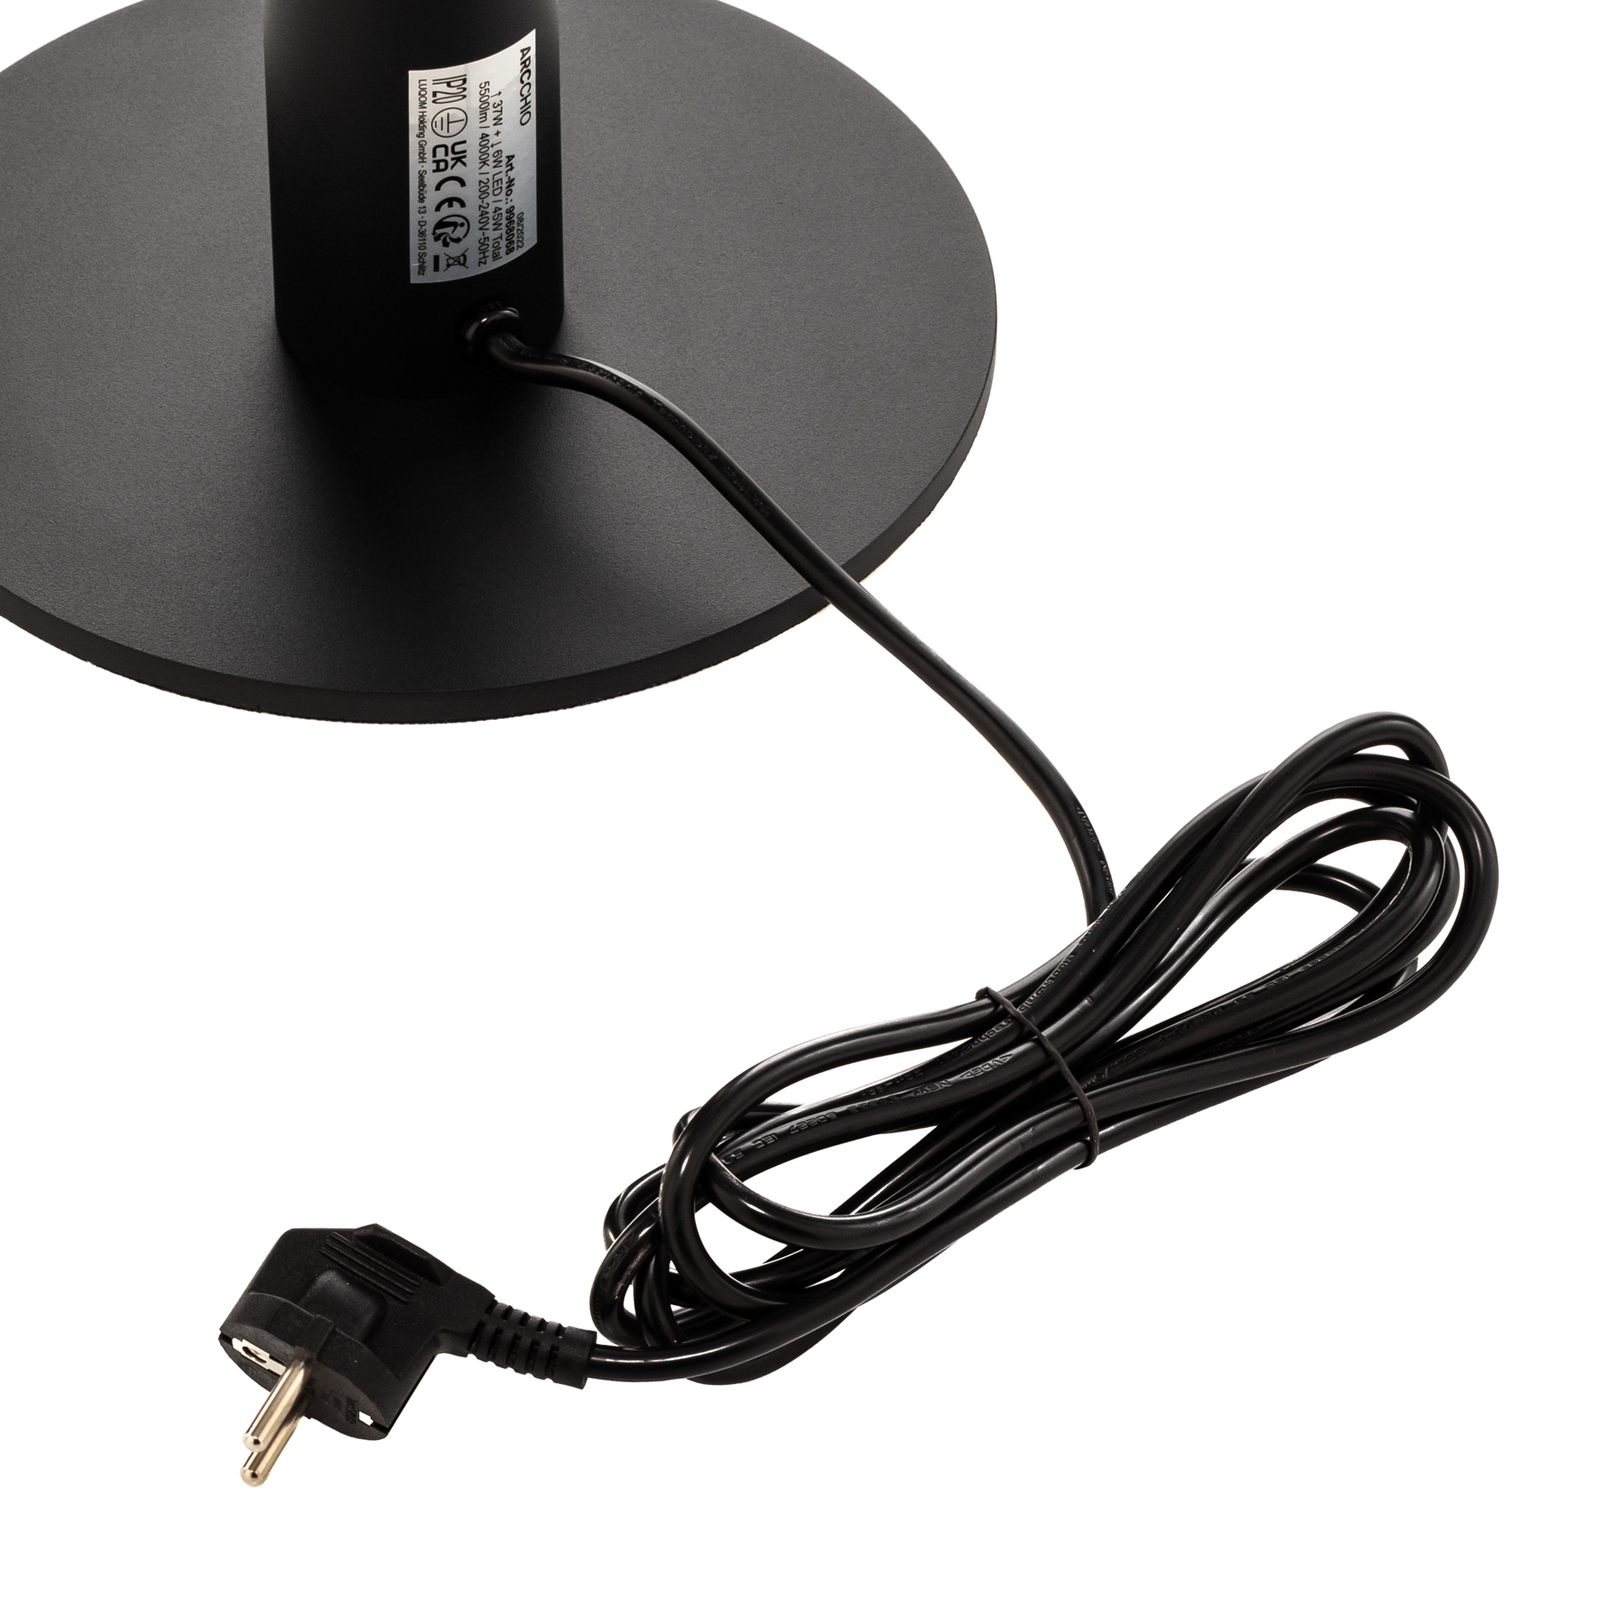 Arcchio Padoria LED floor lamp, dimmable, black